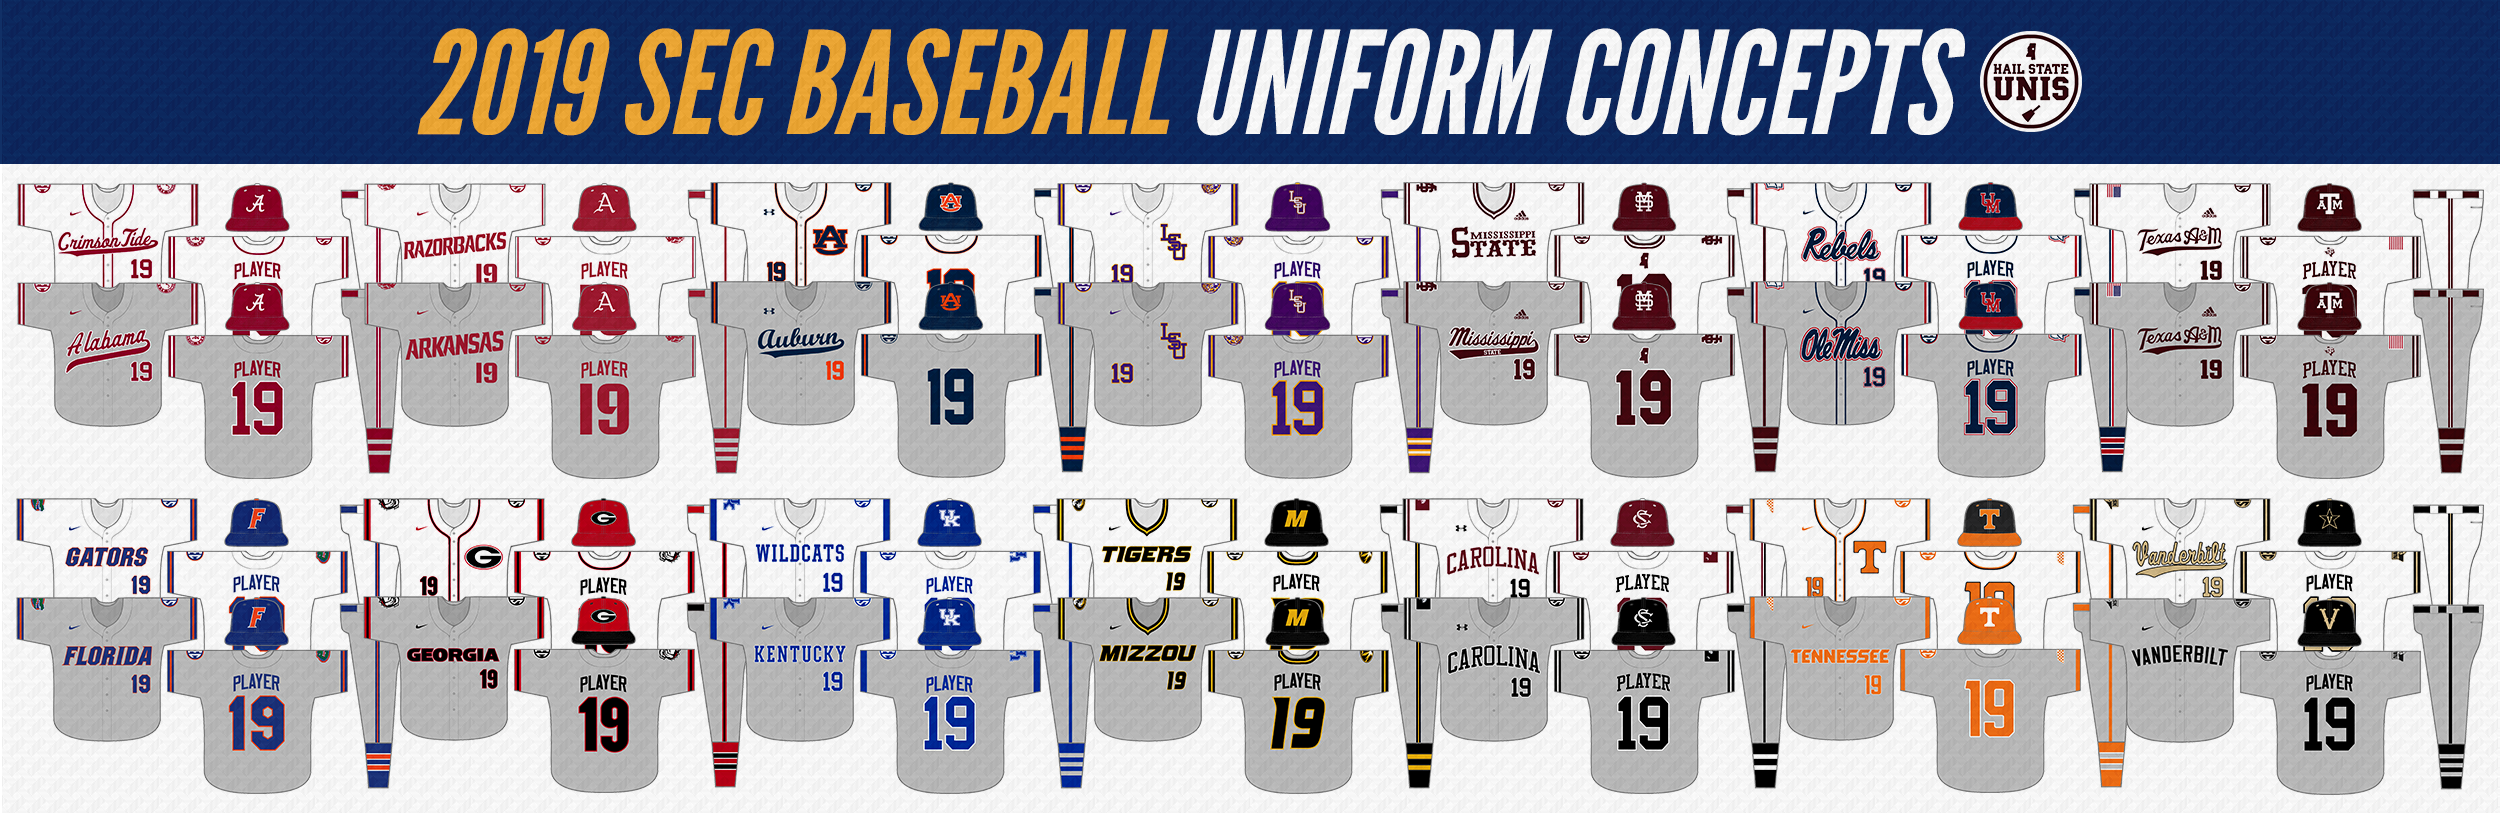 2019 SEC Baseball Uniform Concepts - Hail State Unis